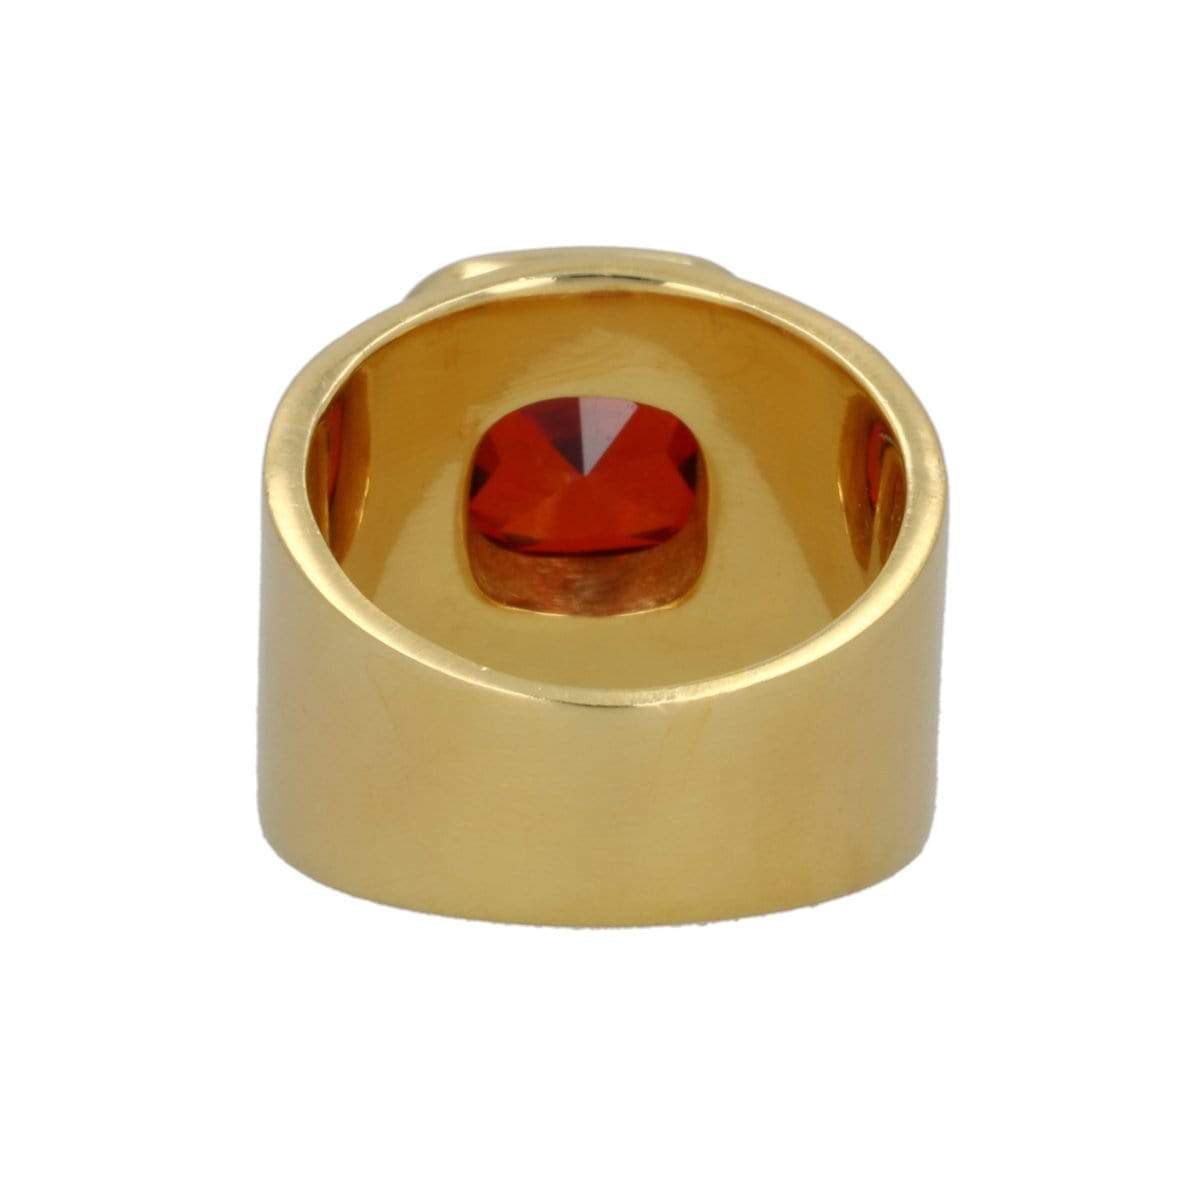 Lilly Ring in 18K Gold Vermeil / Red Garnet